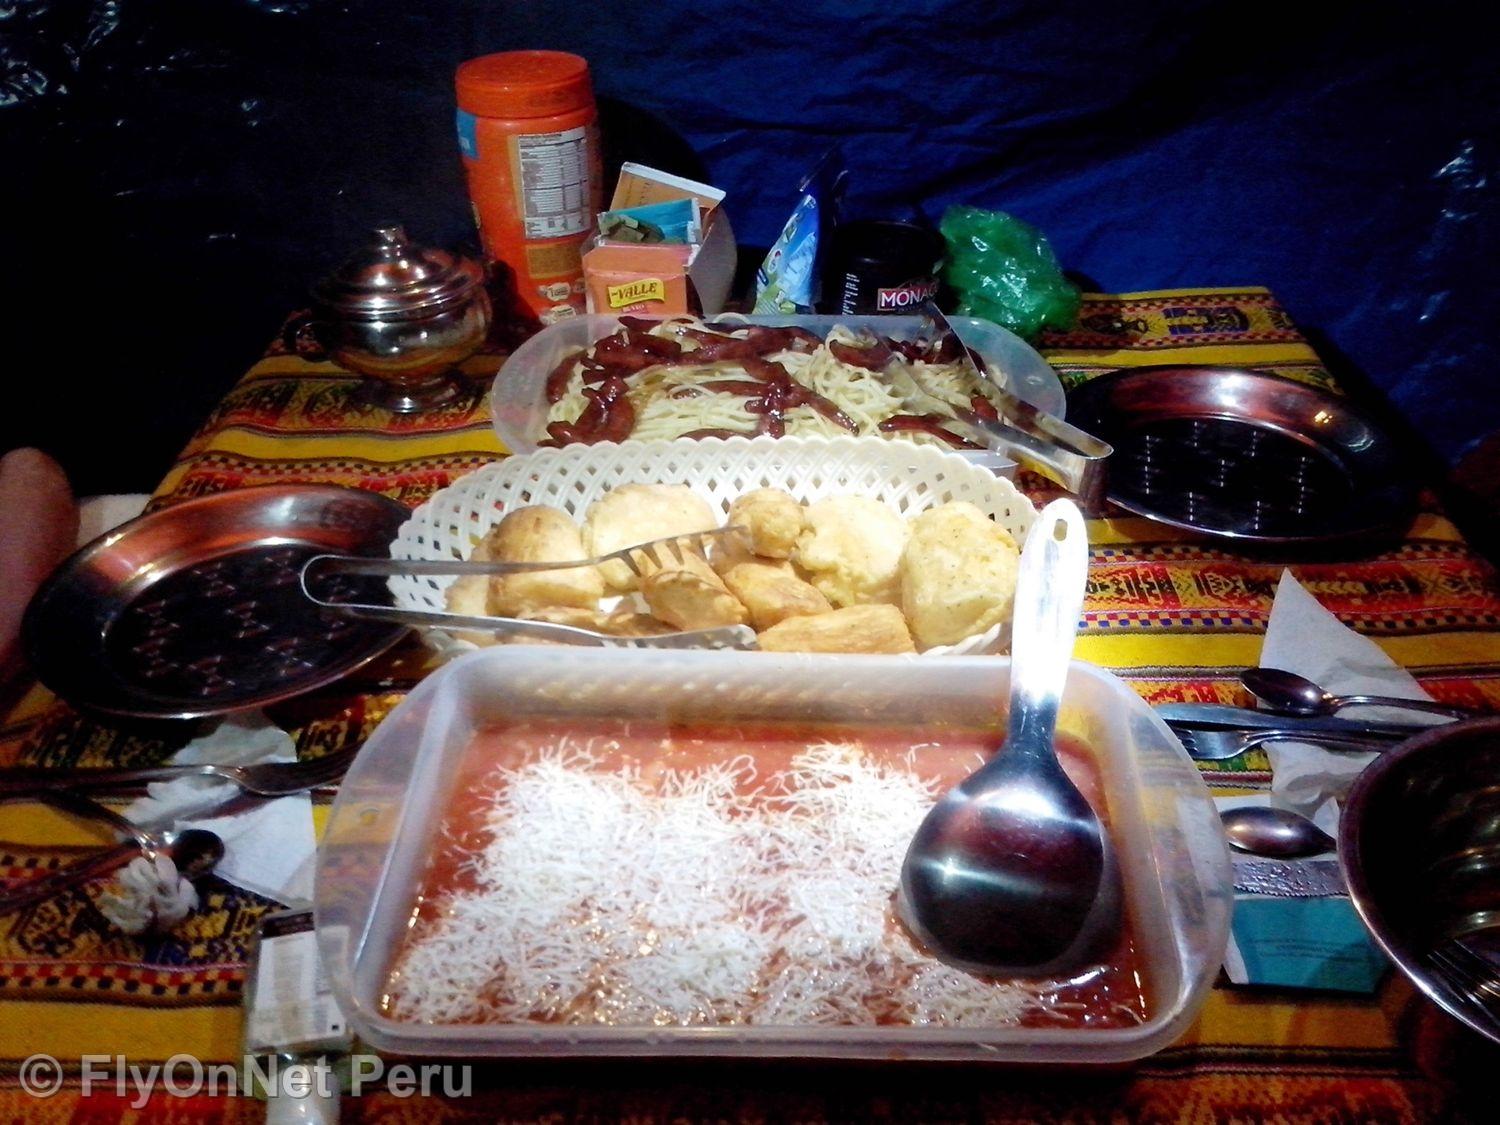 Álbum de fotos: Meal during the trek